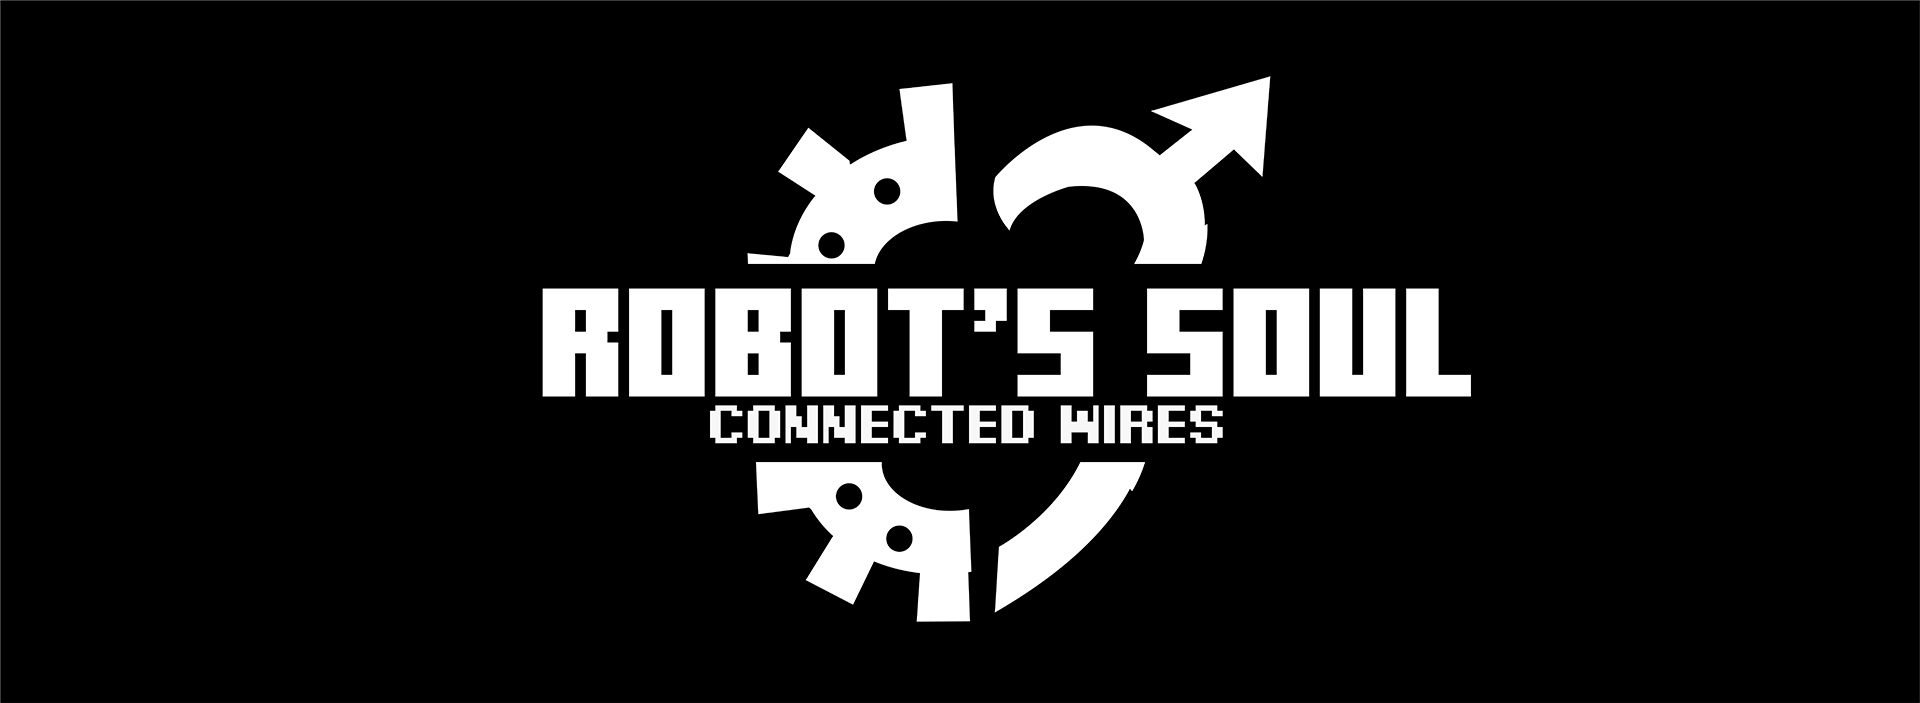 Robot's Souls-Interconnected Wires